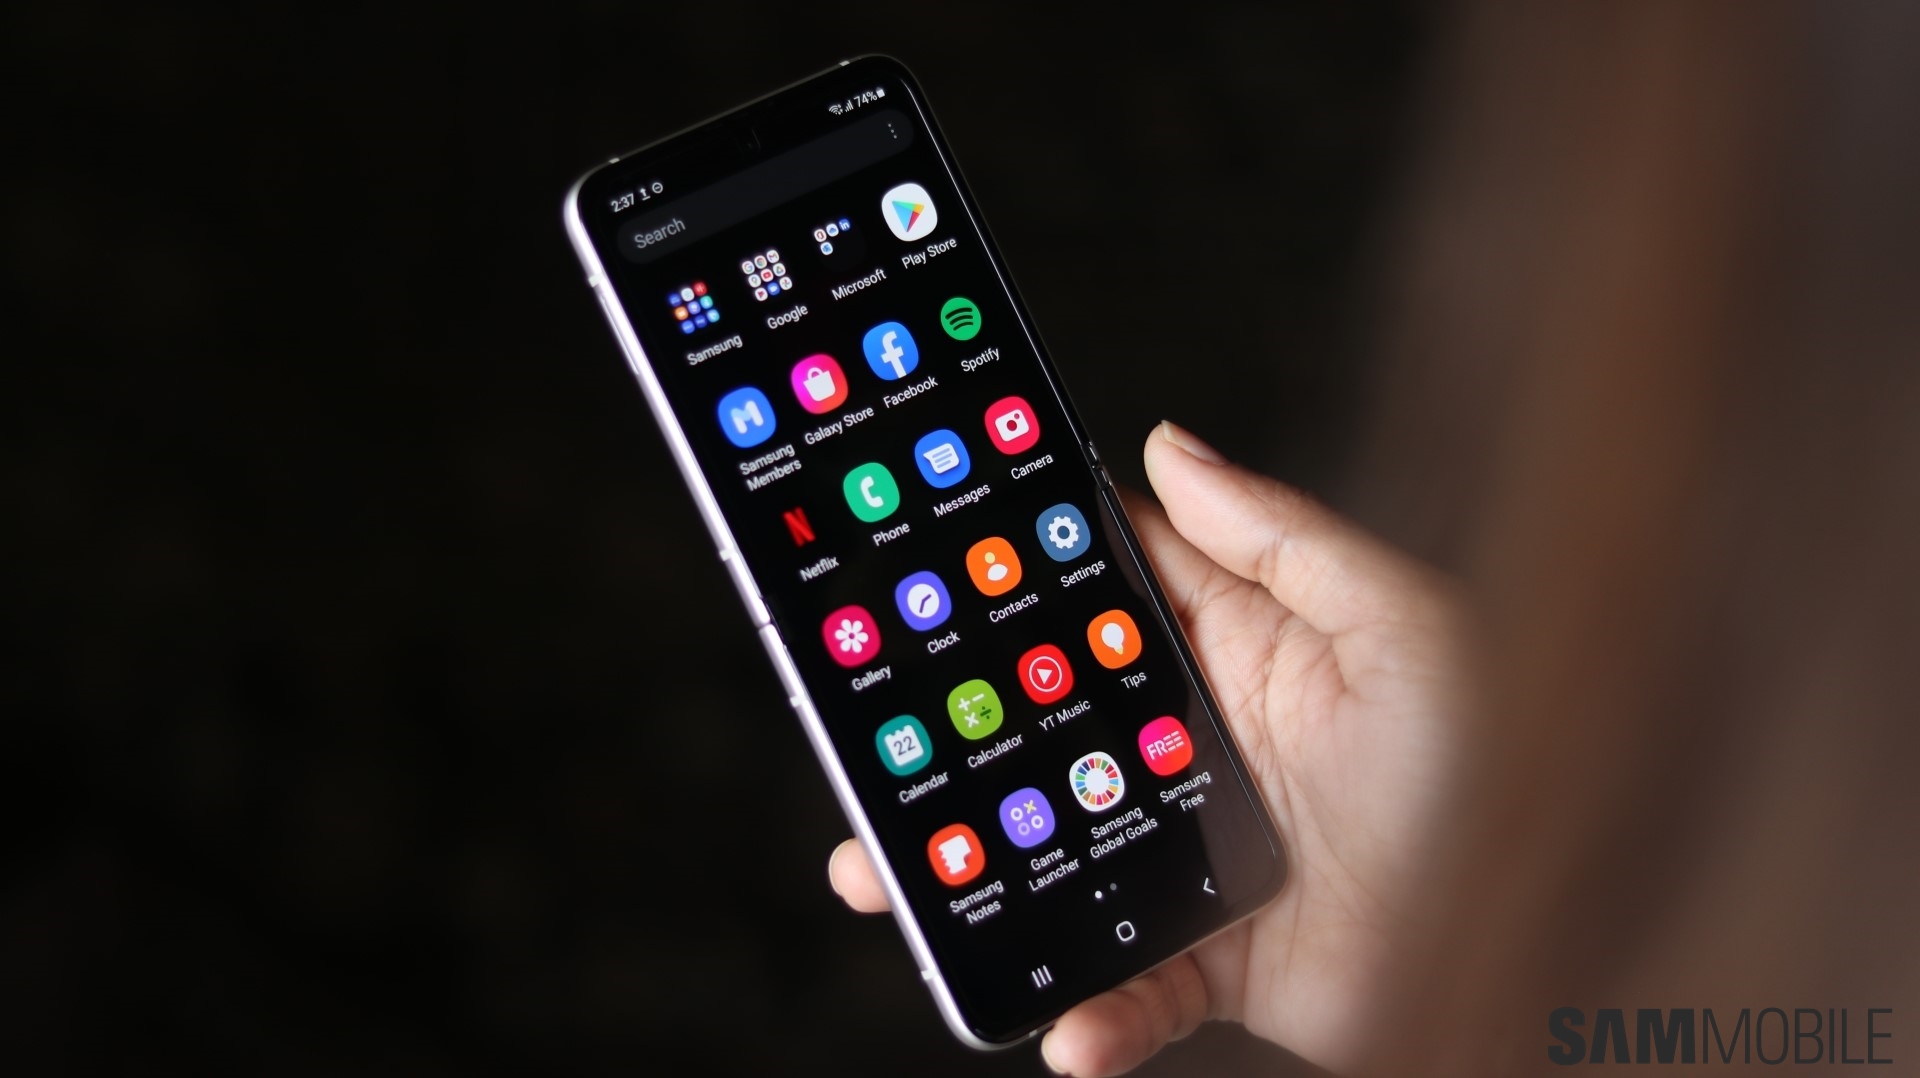 Samsung Galaxy Z Flip 3 review: A stunning foldable